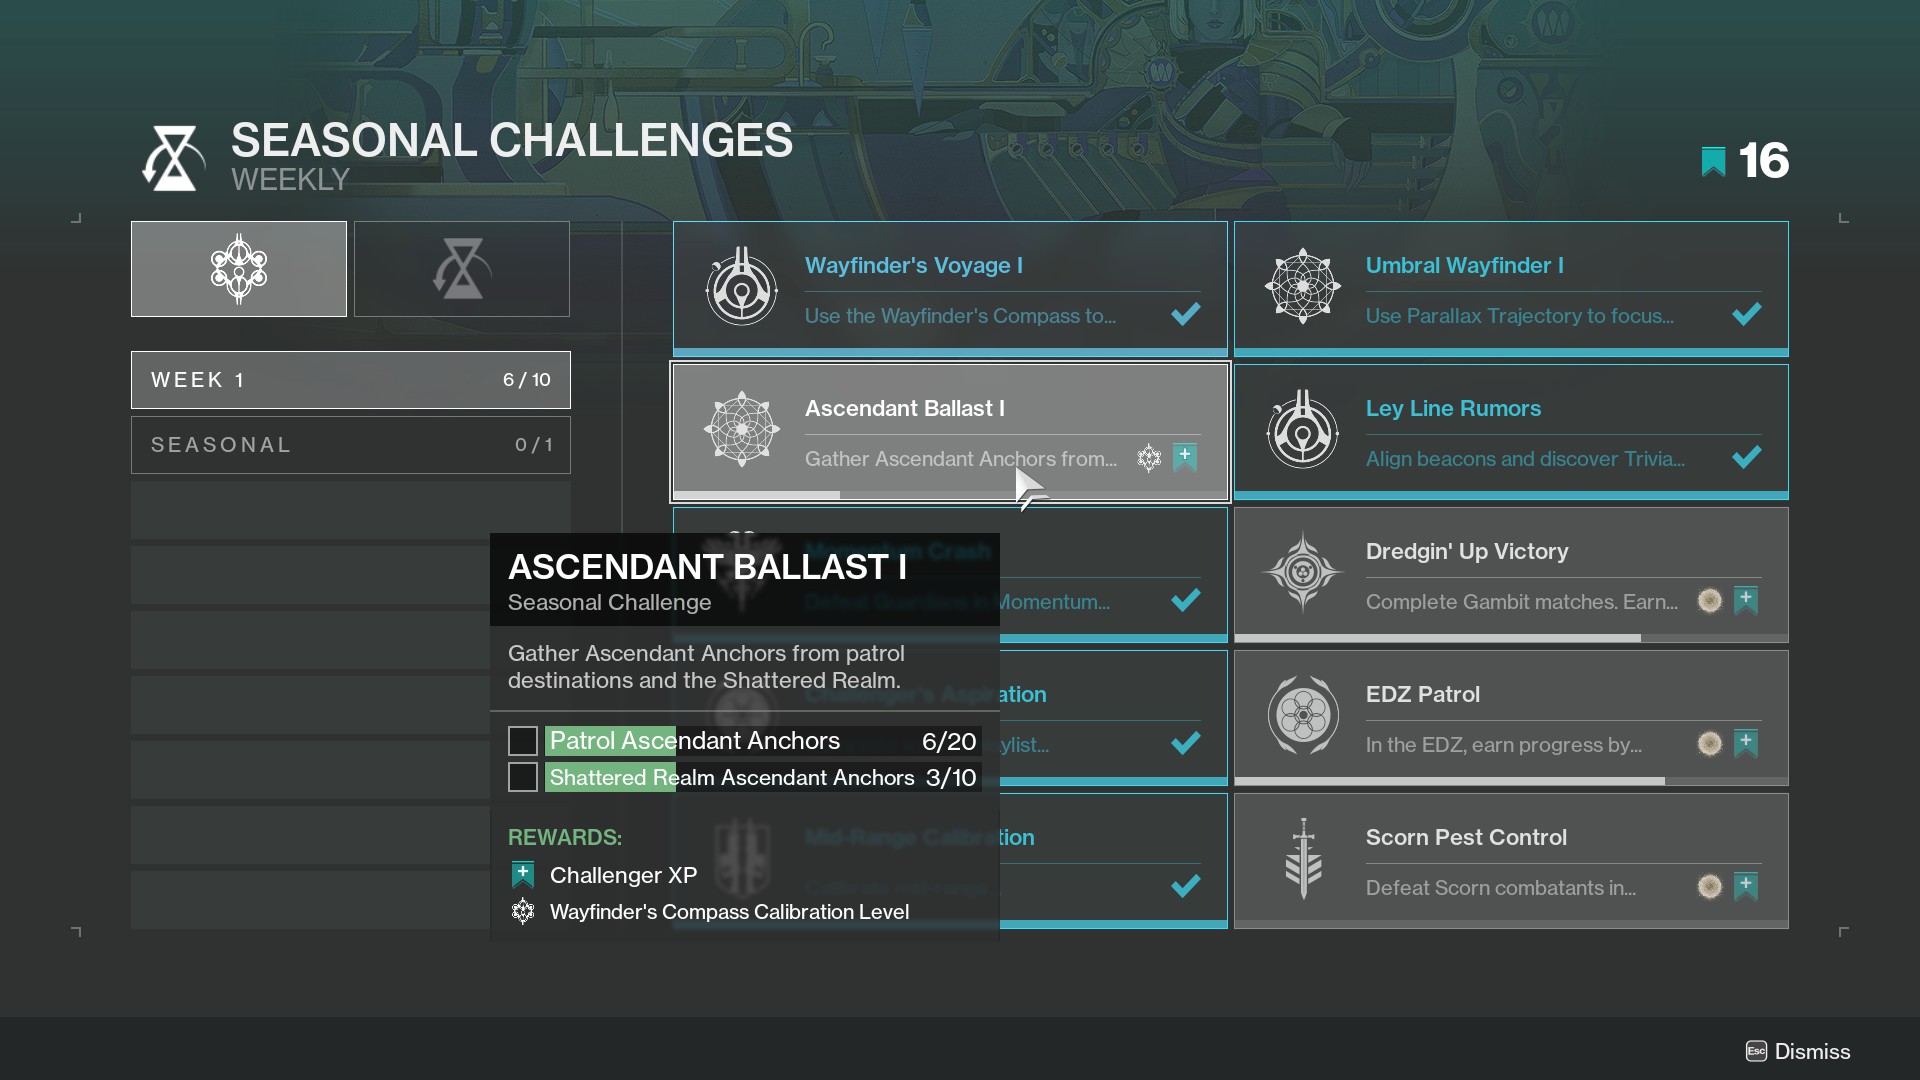 Seasonal challenges menu showing Ascendant Ballast 1.